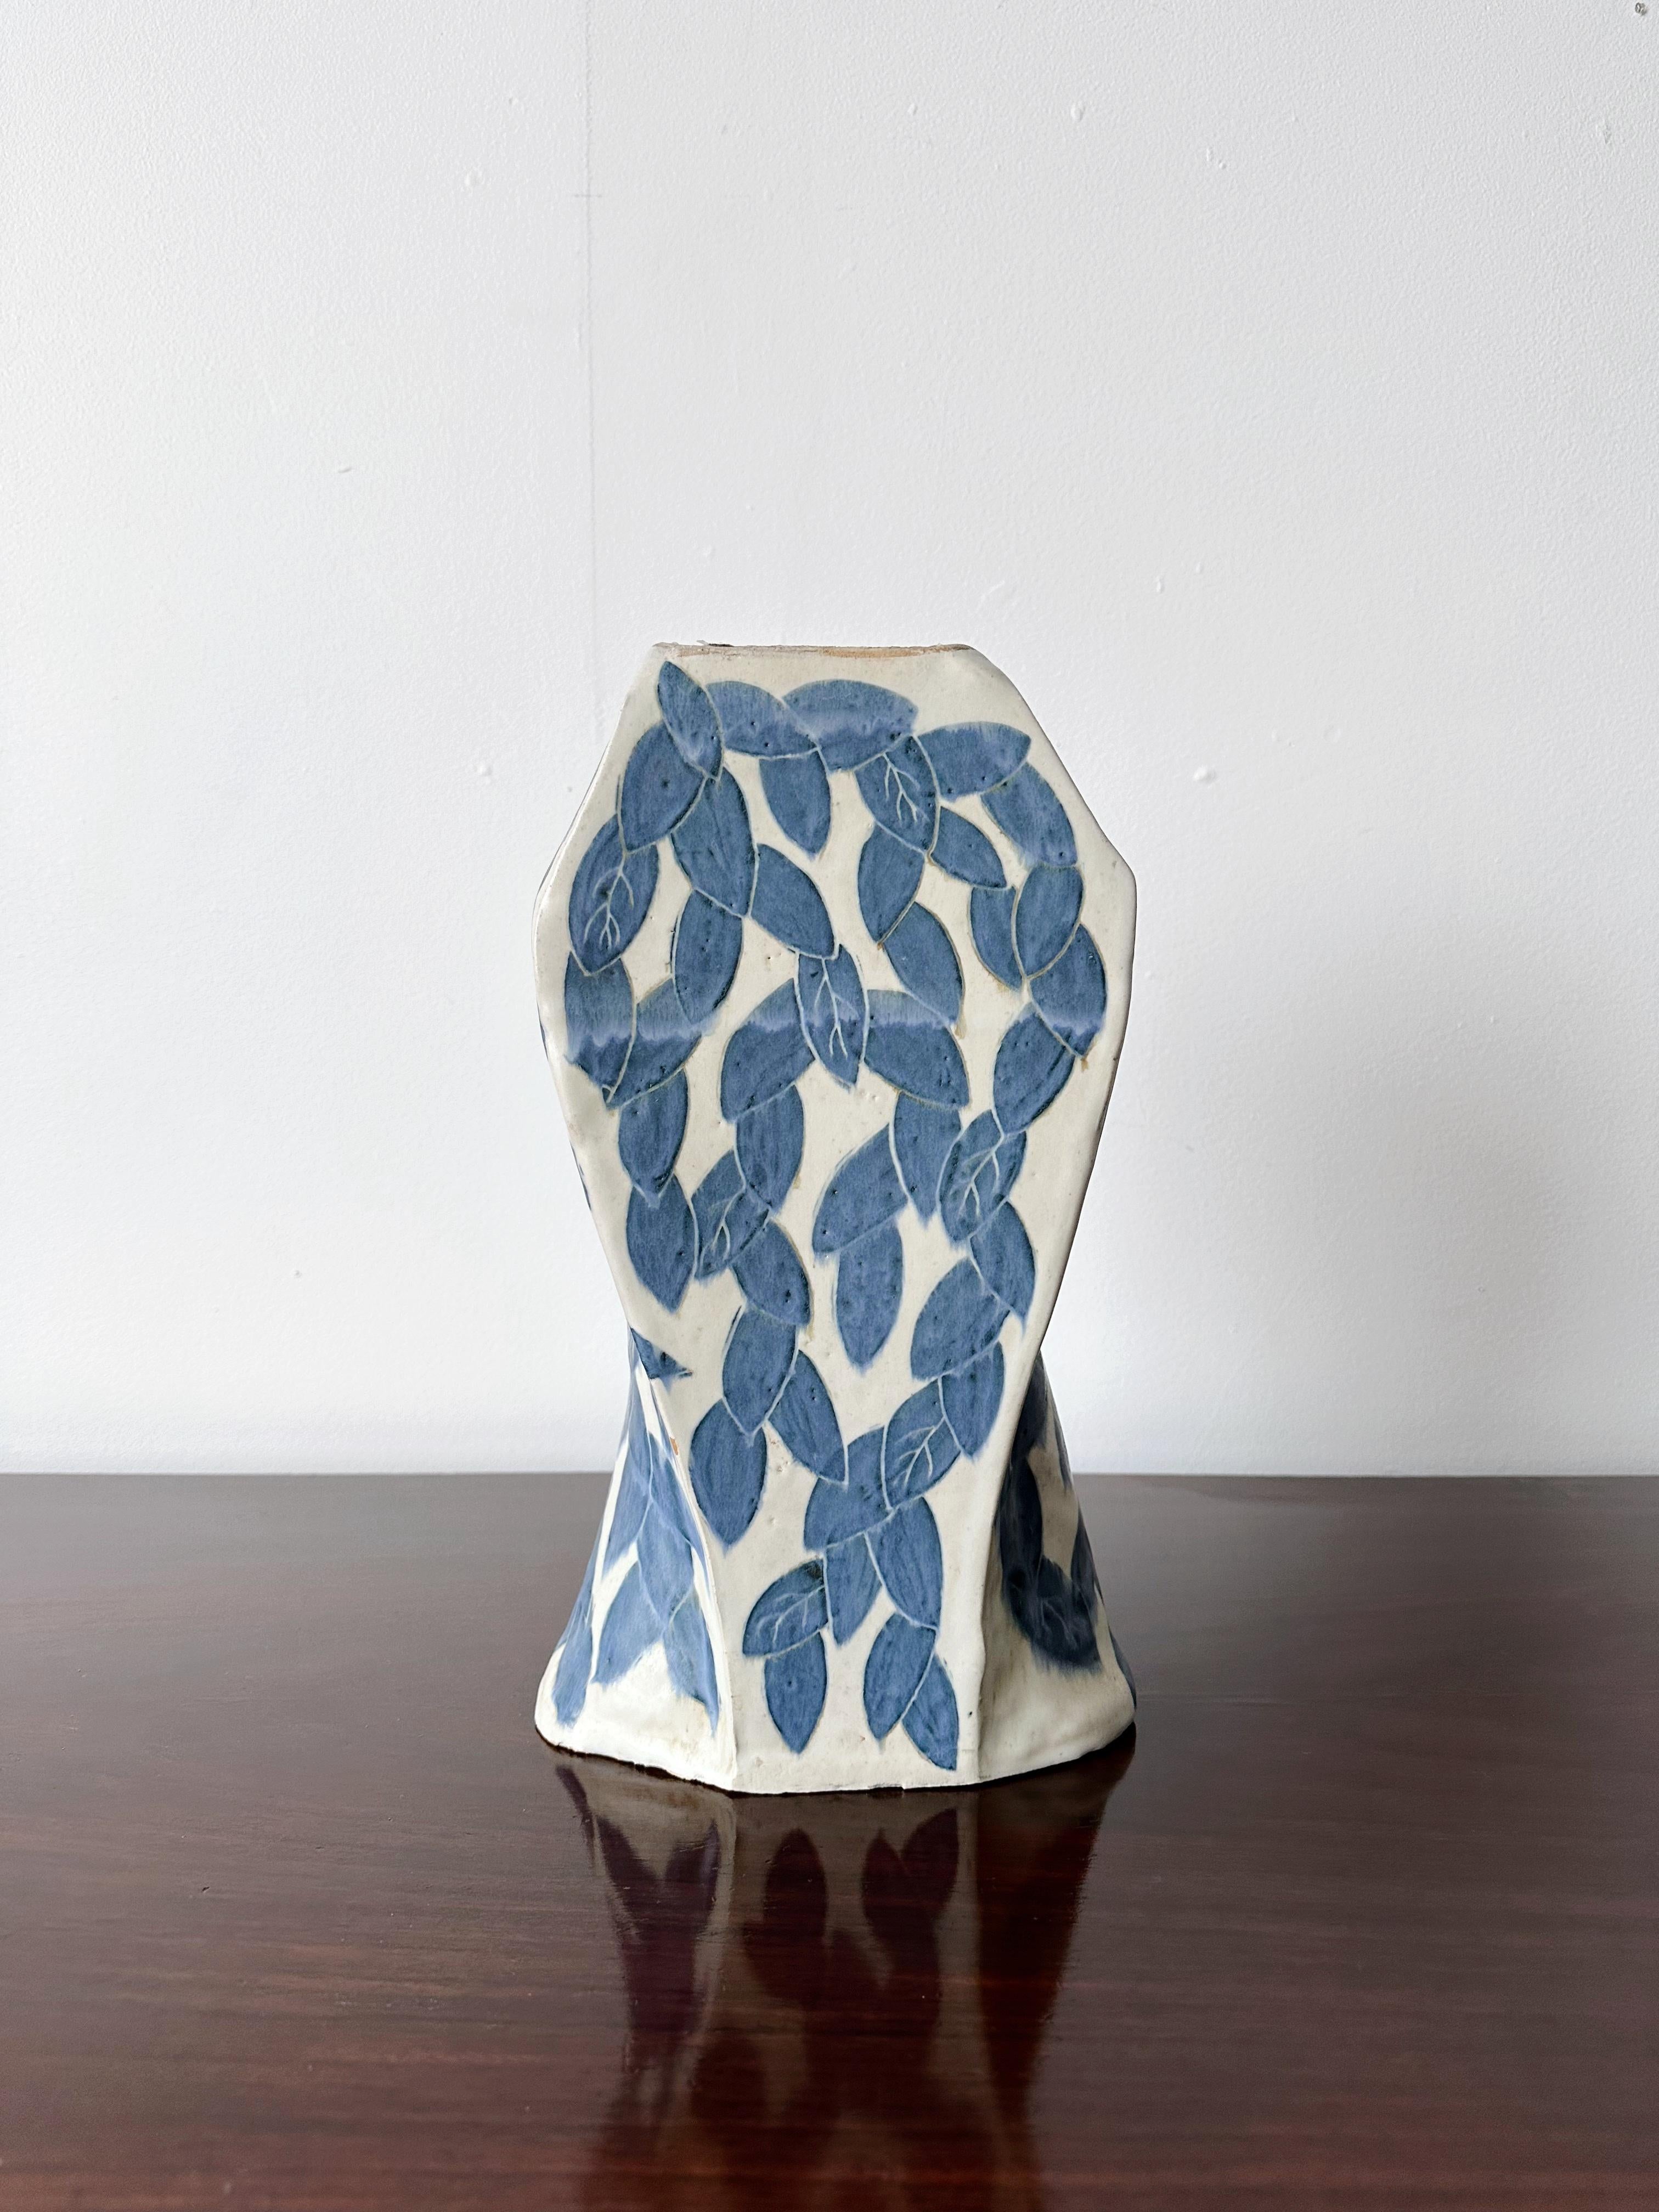 White & Blue Leaf Print Mediterranean Style Big Ceramic Vase

//  

Dimensions: 
7”W x 4